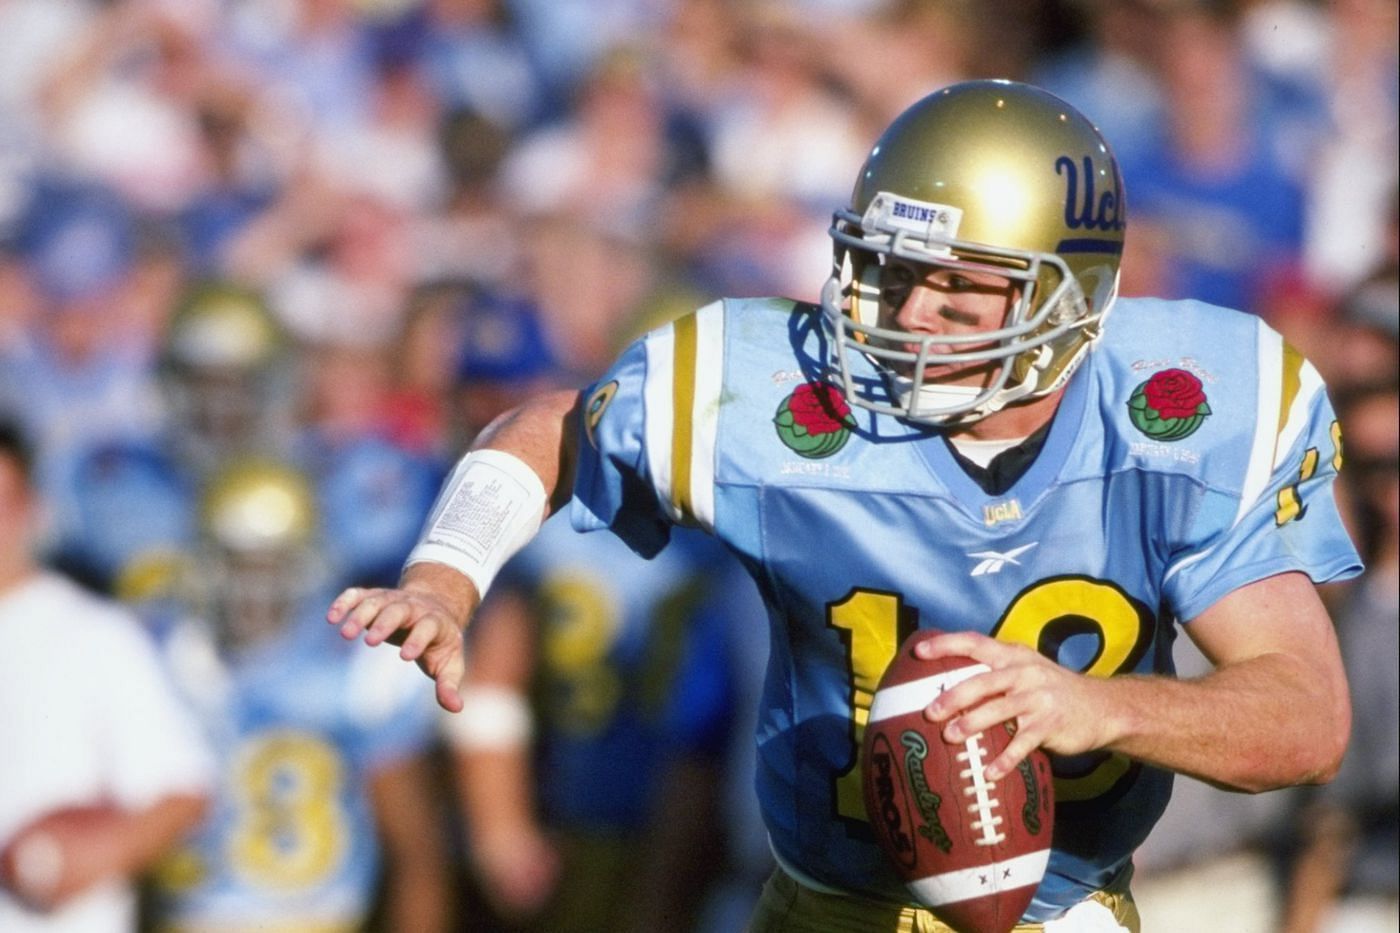 UCLA Football: New take on their classic uniform look